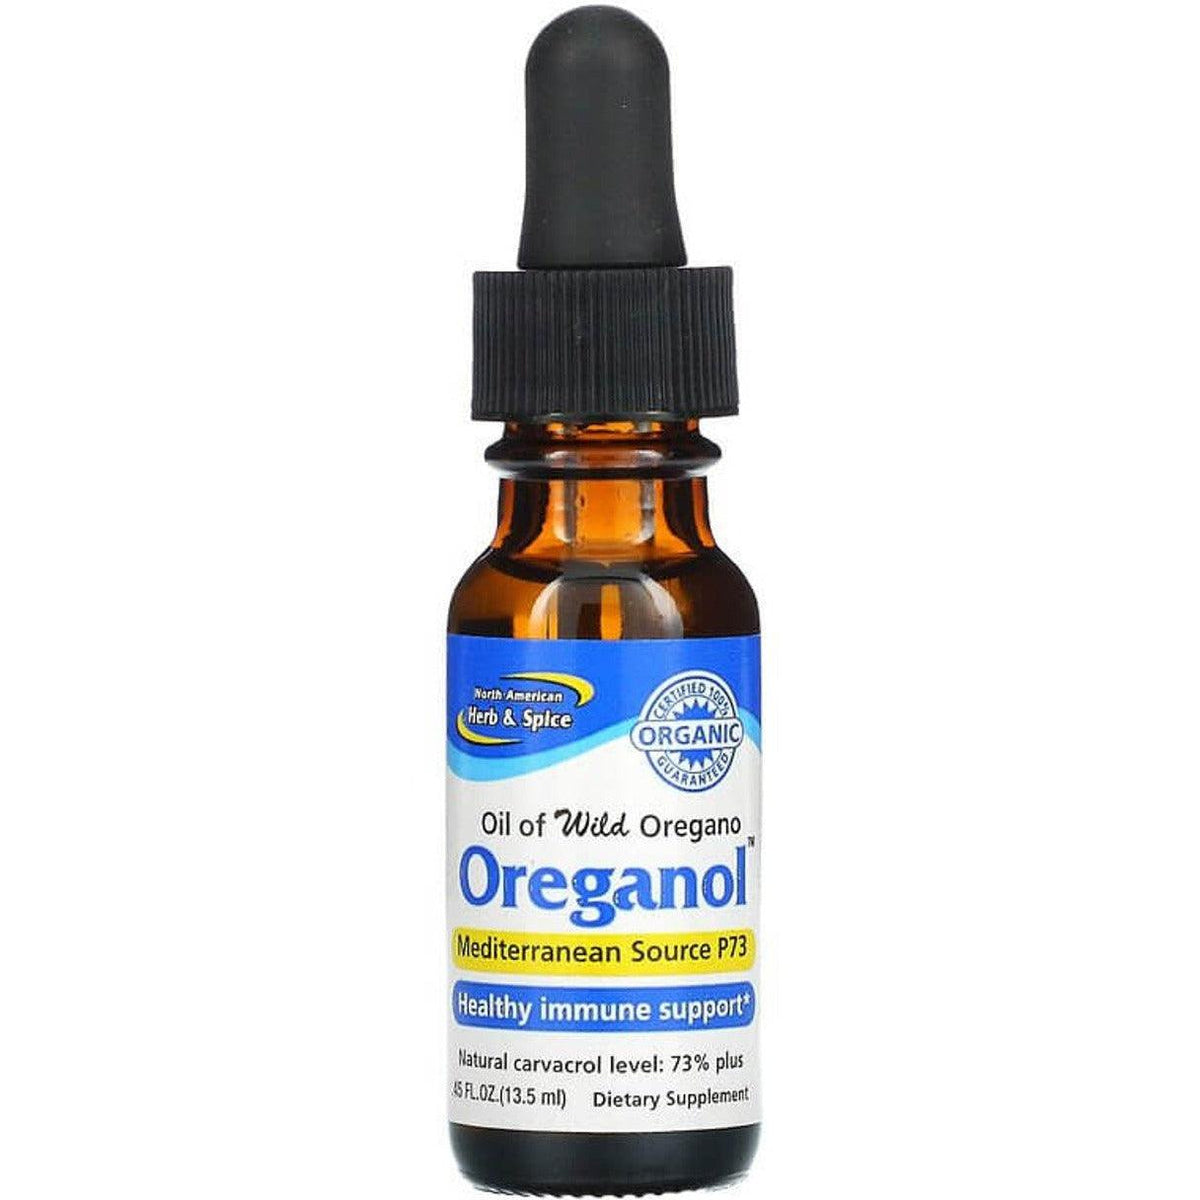 North American Herb & Spice Oreganol P73 Drop 13.5 ml Cough, Cold & Flu at Village Vitamin Store